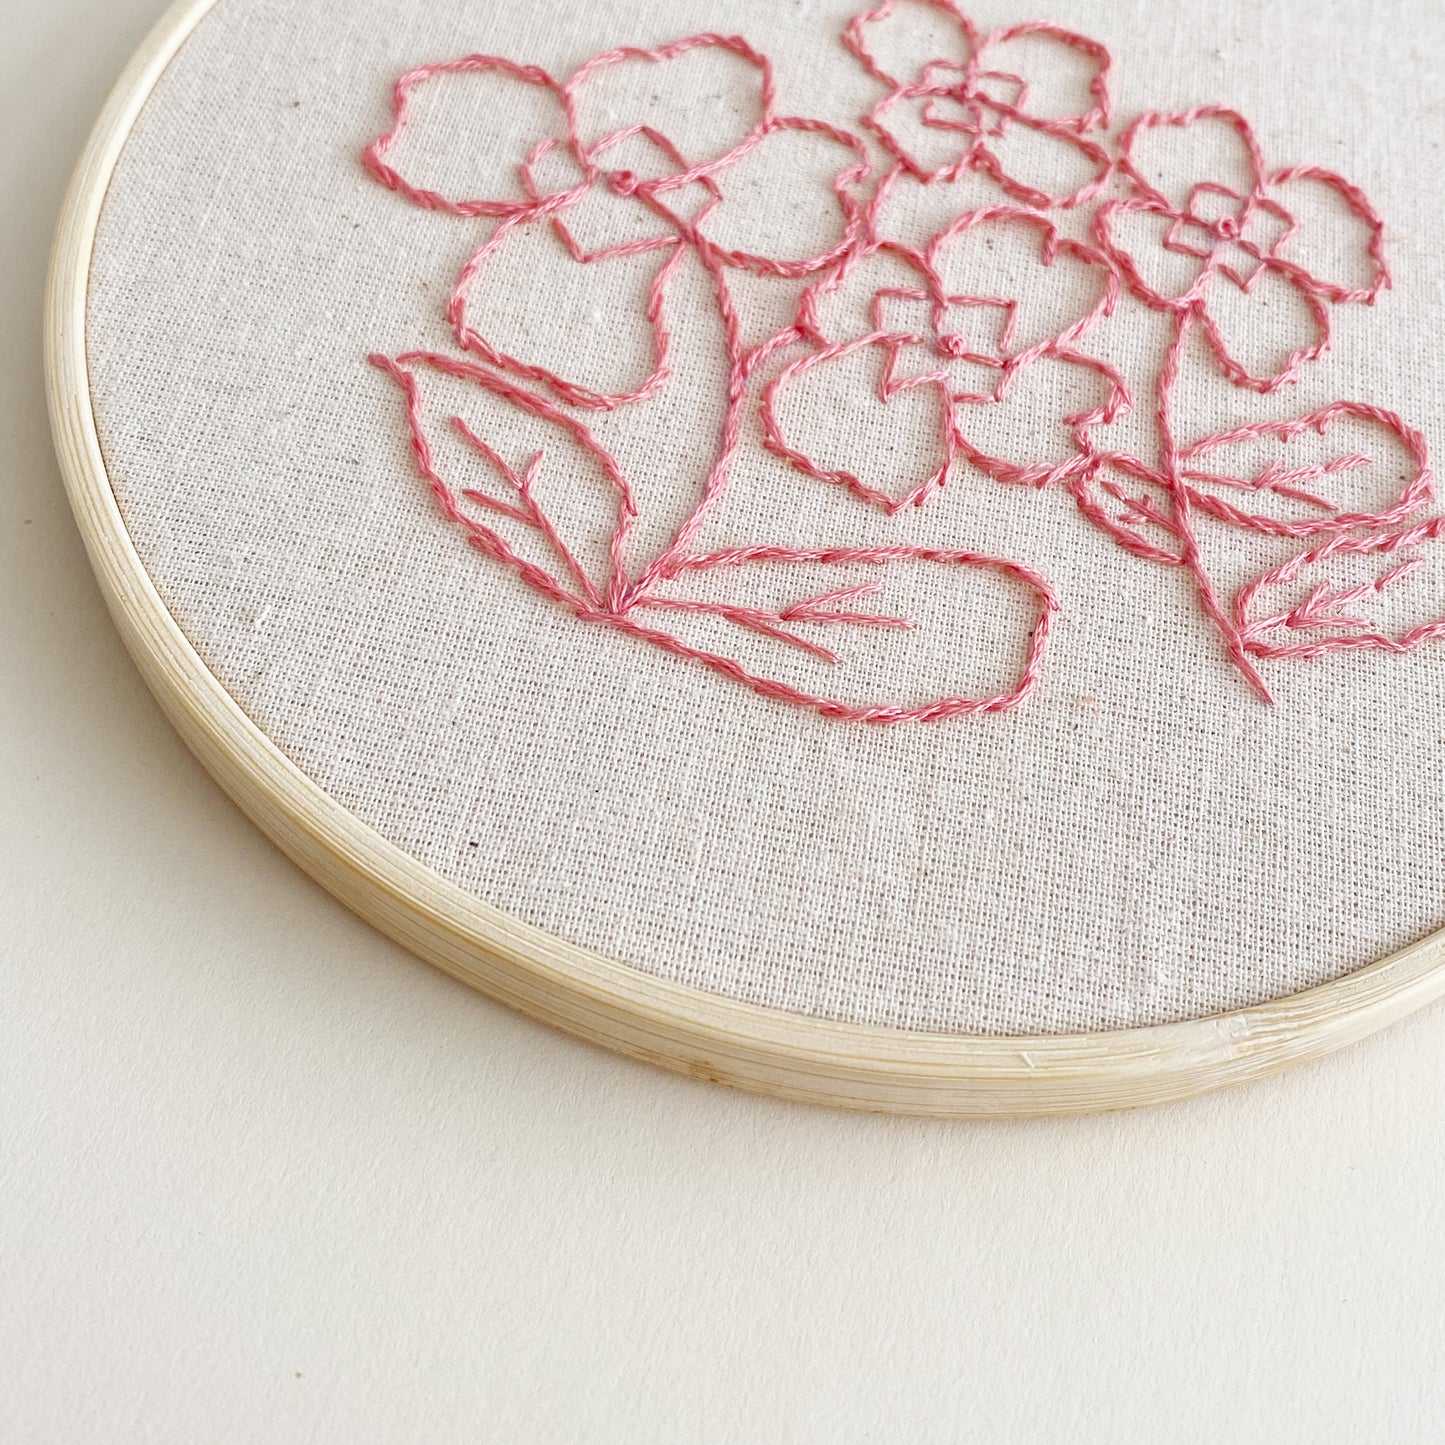 Primrose - Beginners Embroidery Kit